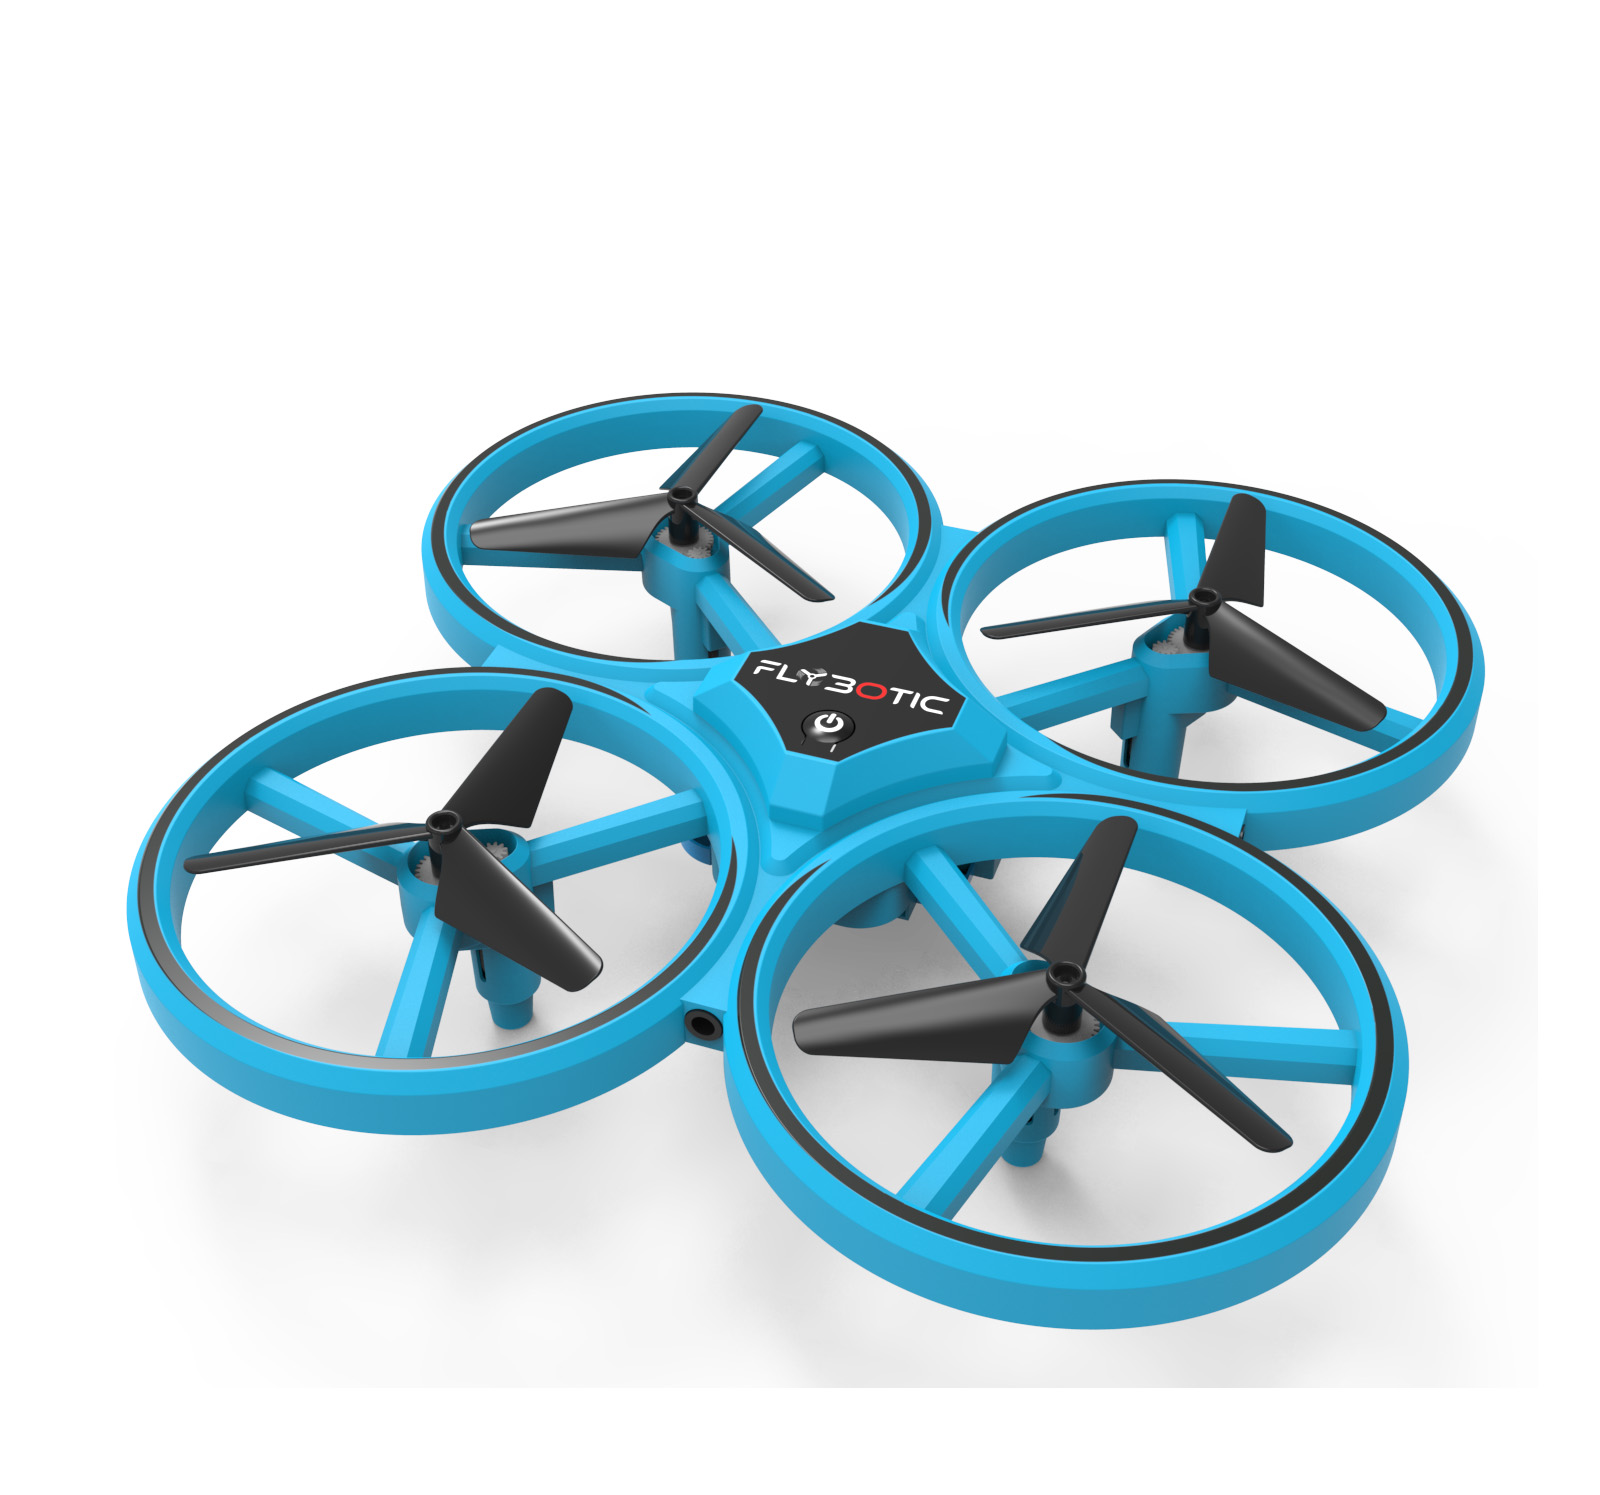 Flashing drone Flybotic : télécommande poignet